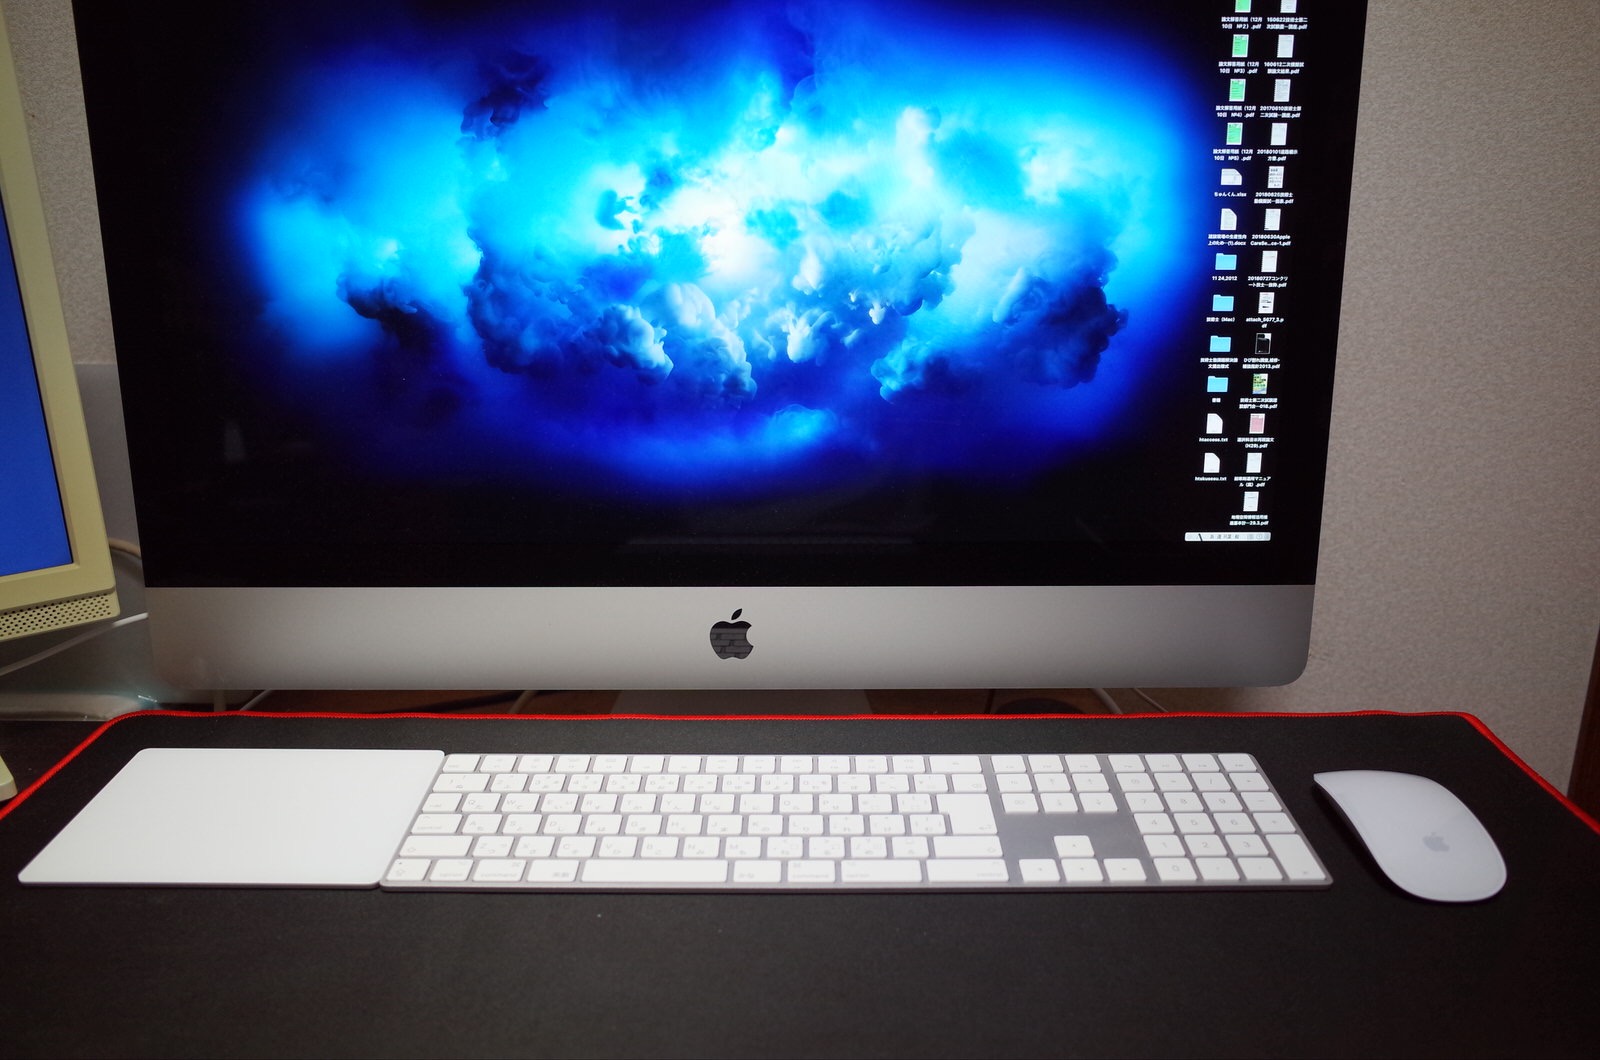 [Mac] 久しぶりにテンキー付きMagic KeyboardからMagic Keyboardに変えてみると机の上が広々快適にタイピングできたよ